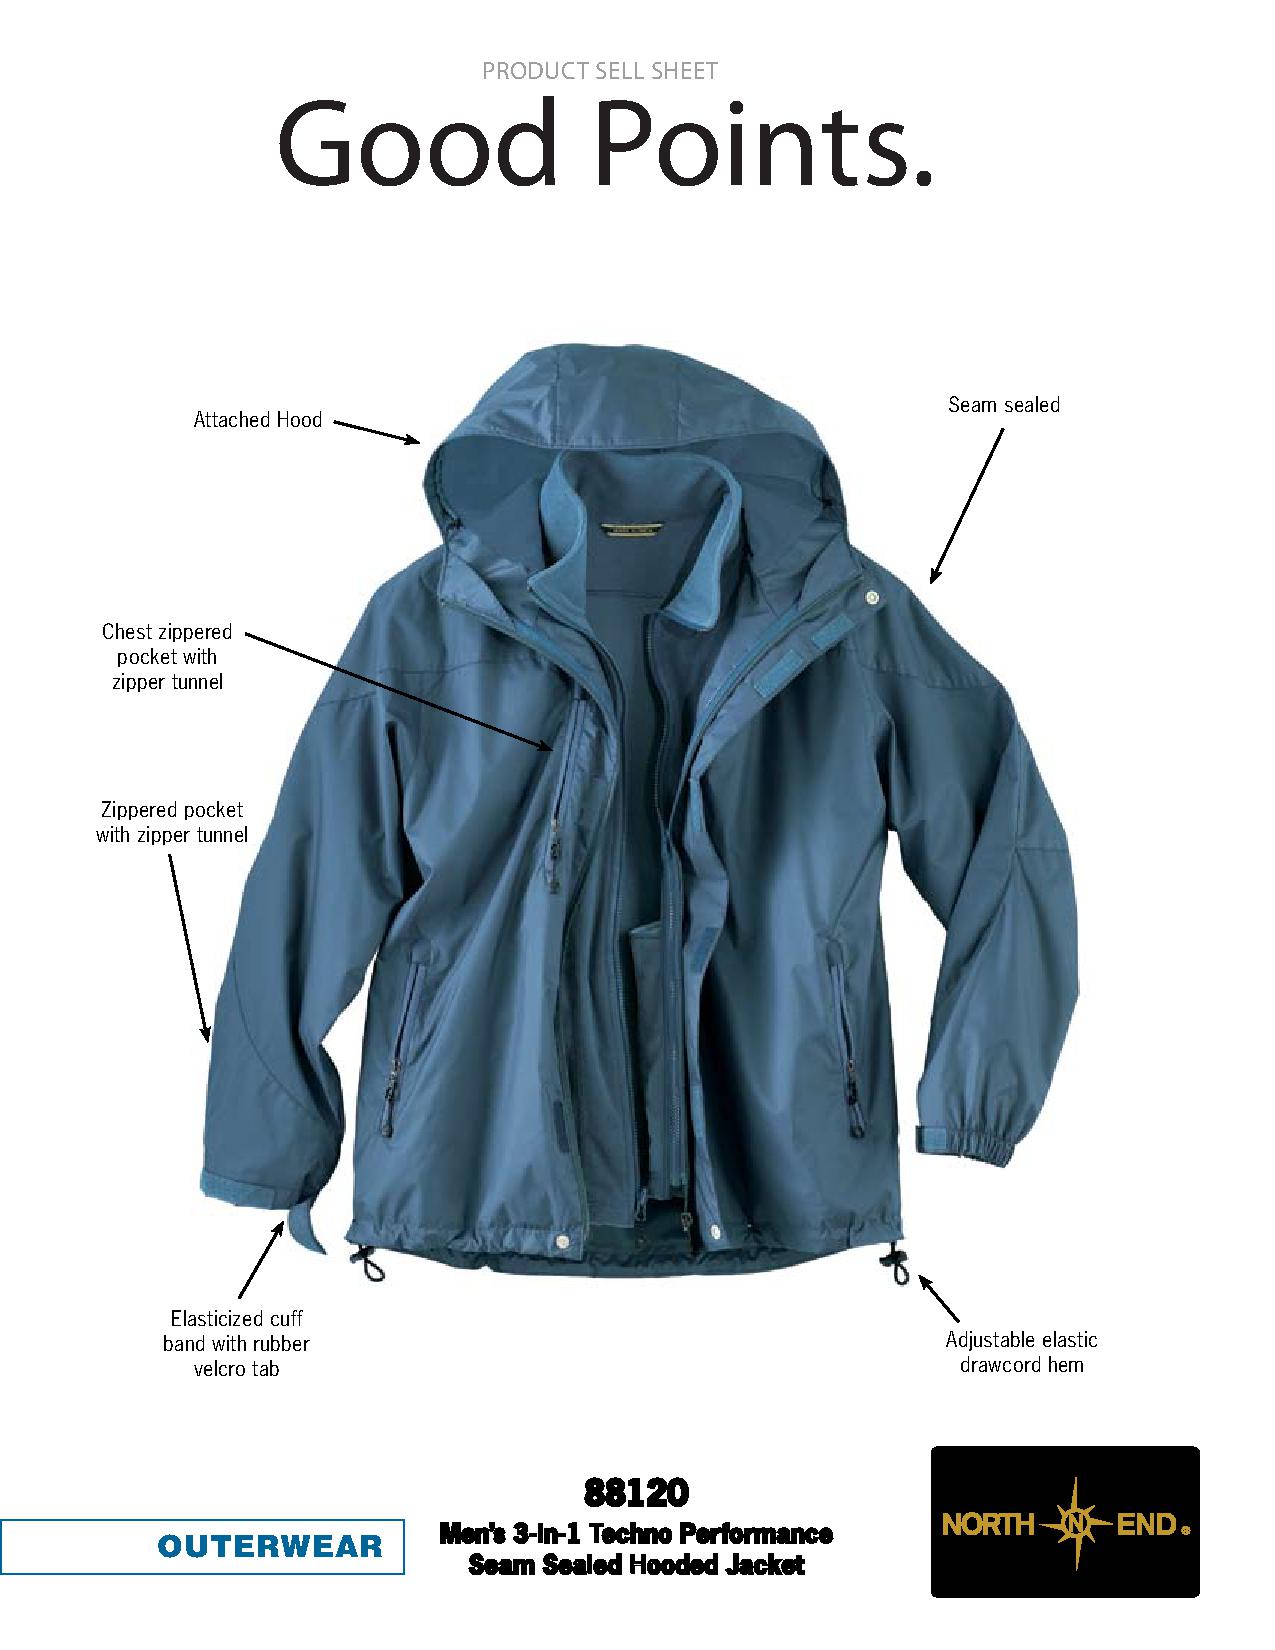 Ash City UTK 2 Warm.Logik 88120 - Men's 3-In-1 Techno Performance Seam-Sealed Hooded Jacket